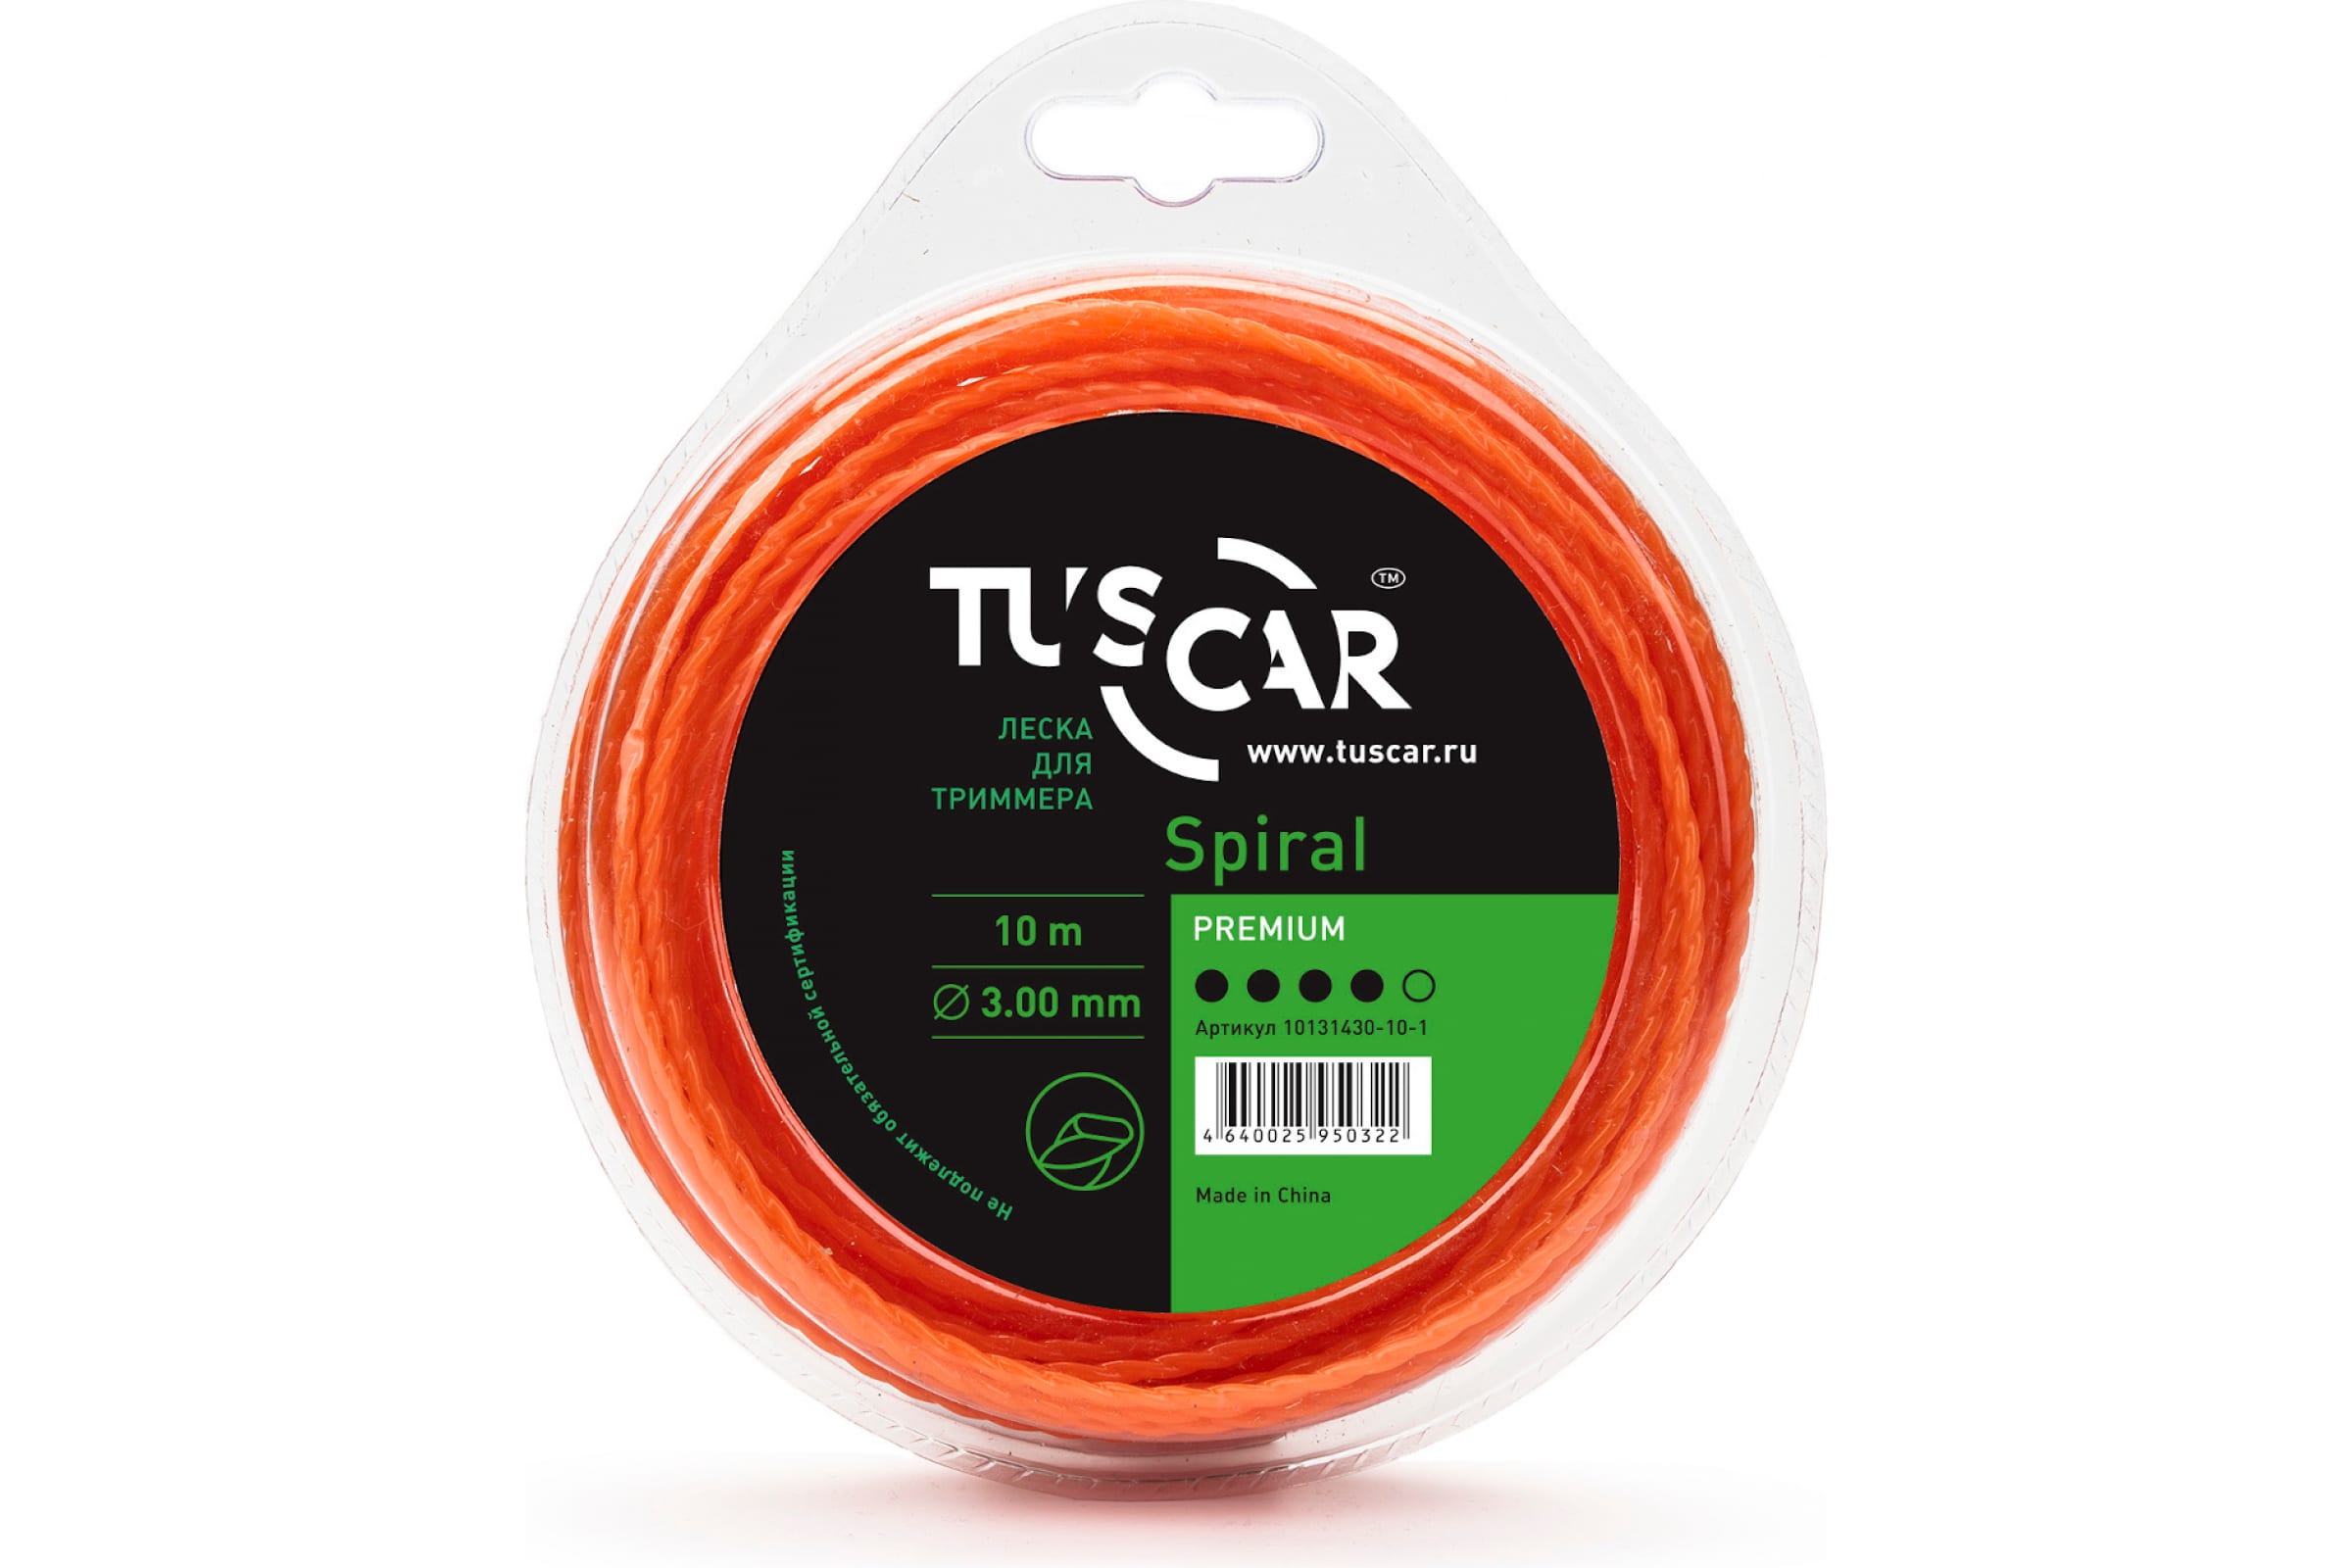 фото Tuscar леска для триммера spiral, premium, 3.0mmx10m 10131430-10-1